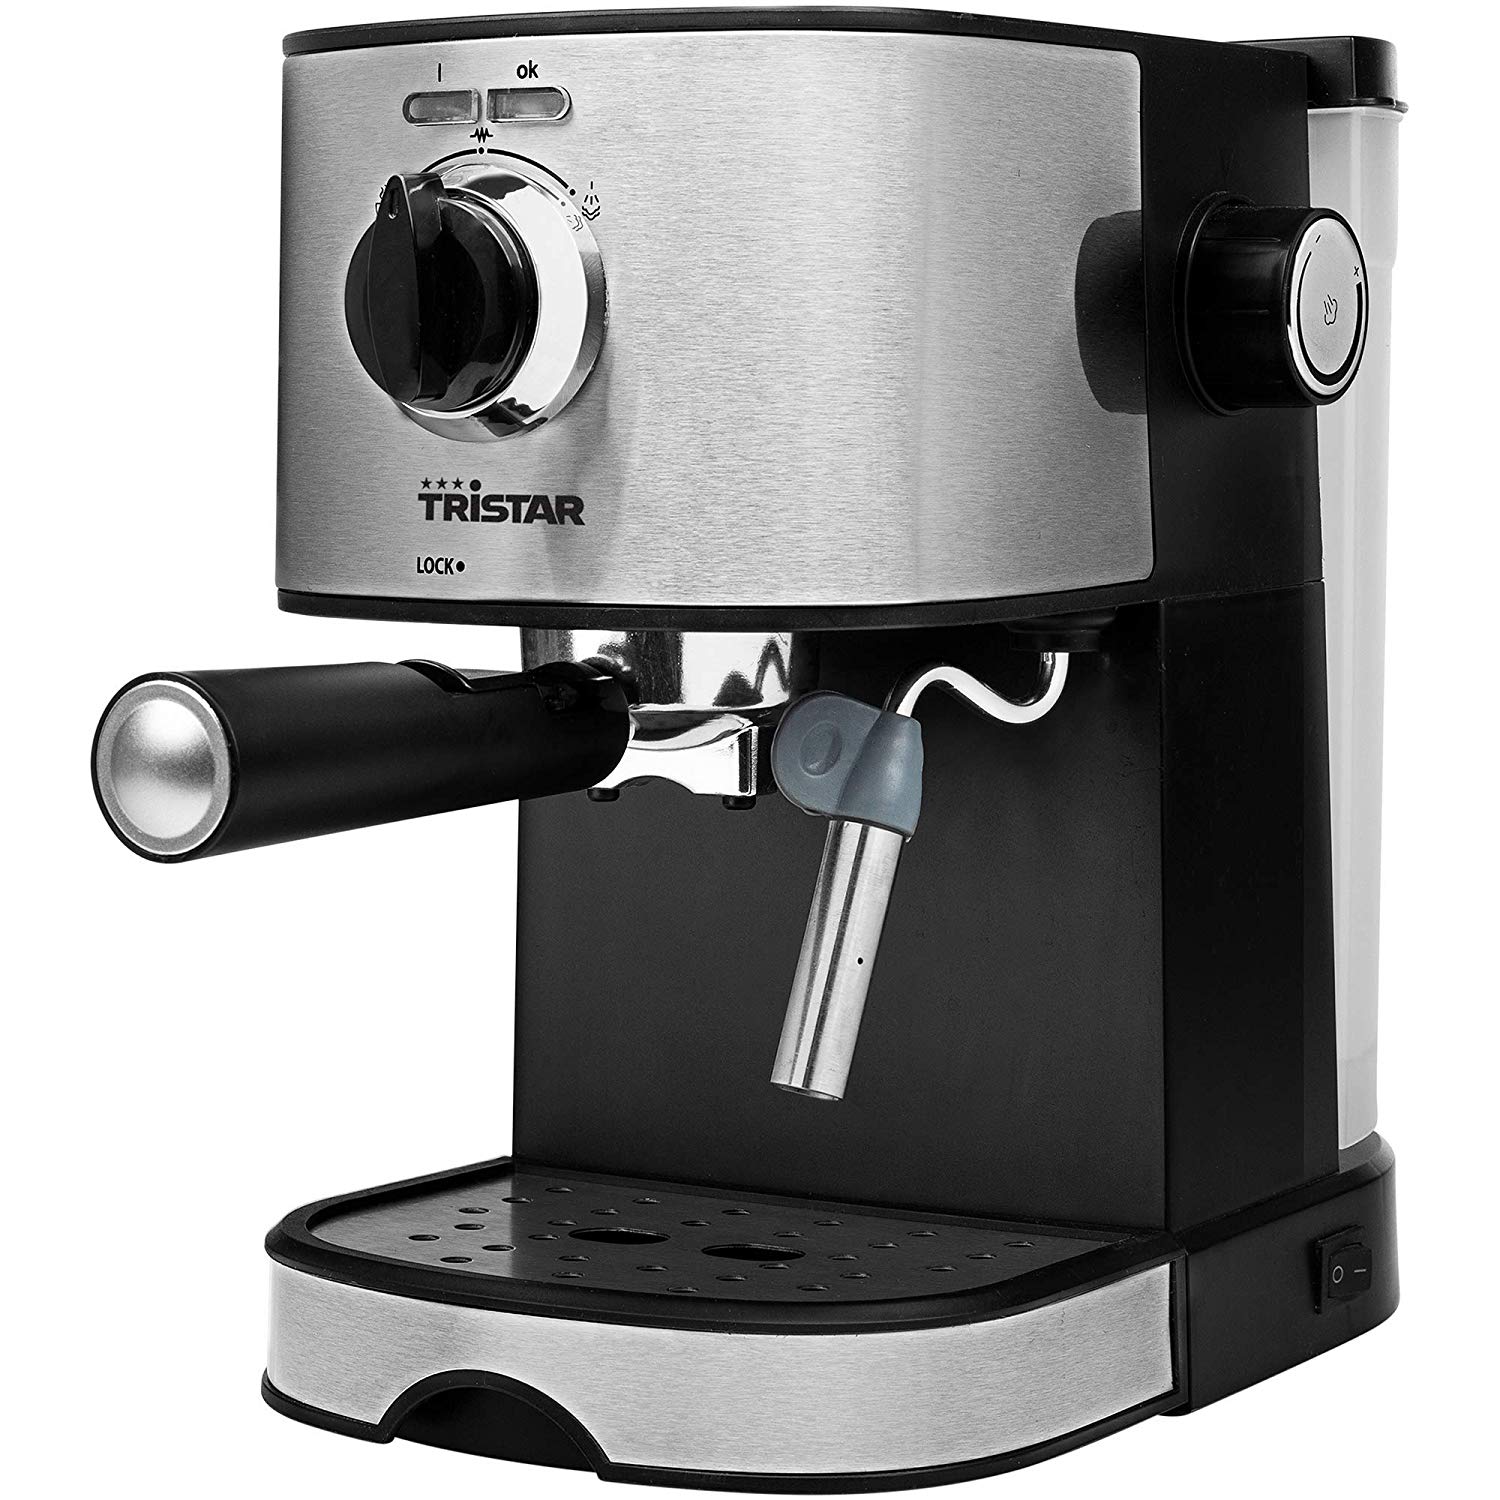 Tristar Cm-2275 Espresso Maker - Steamer - Piston For 1 Or 2 Cups Of Coffee